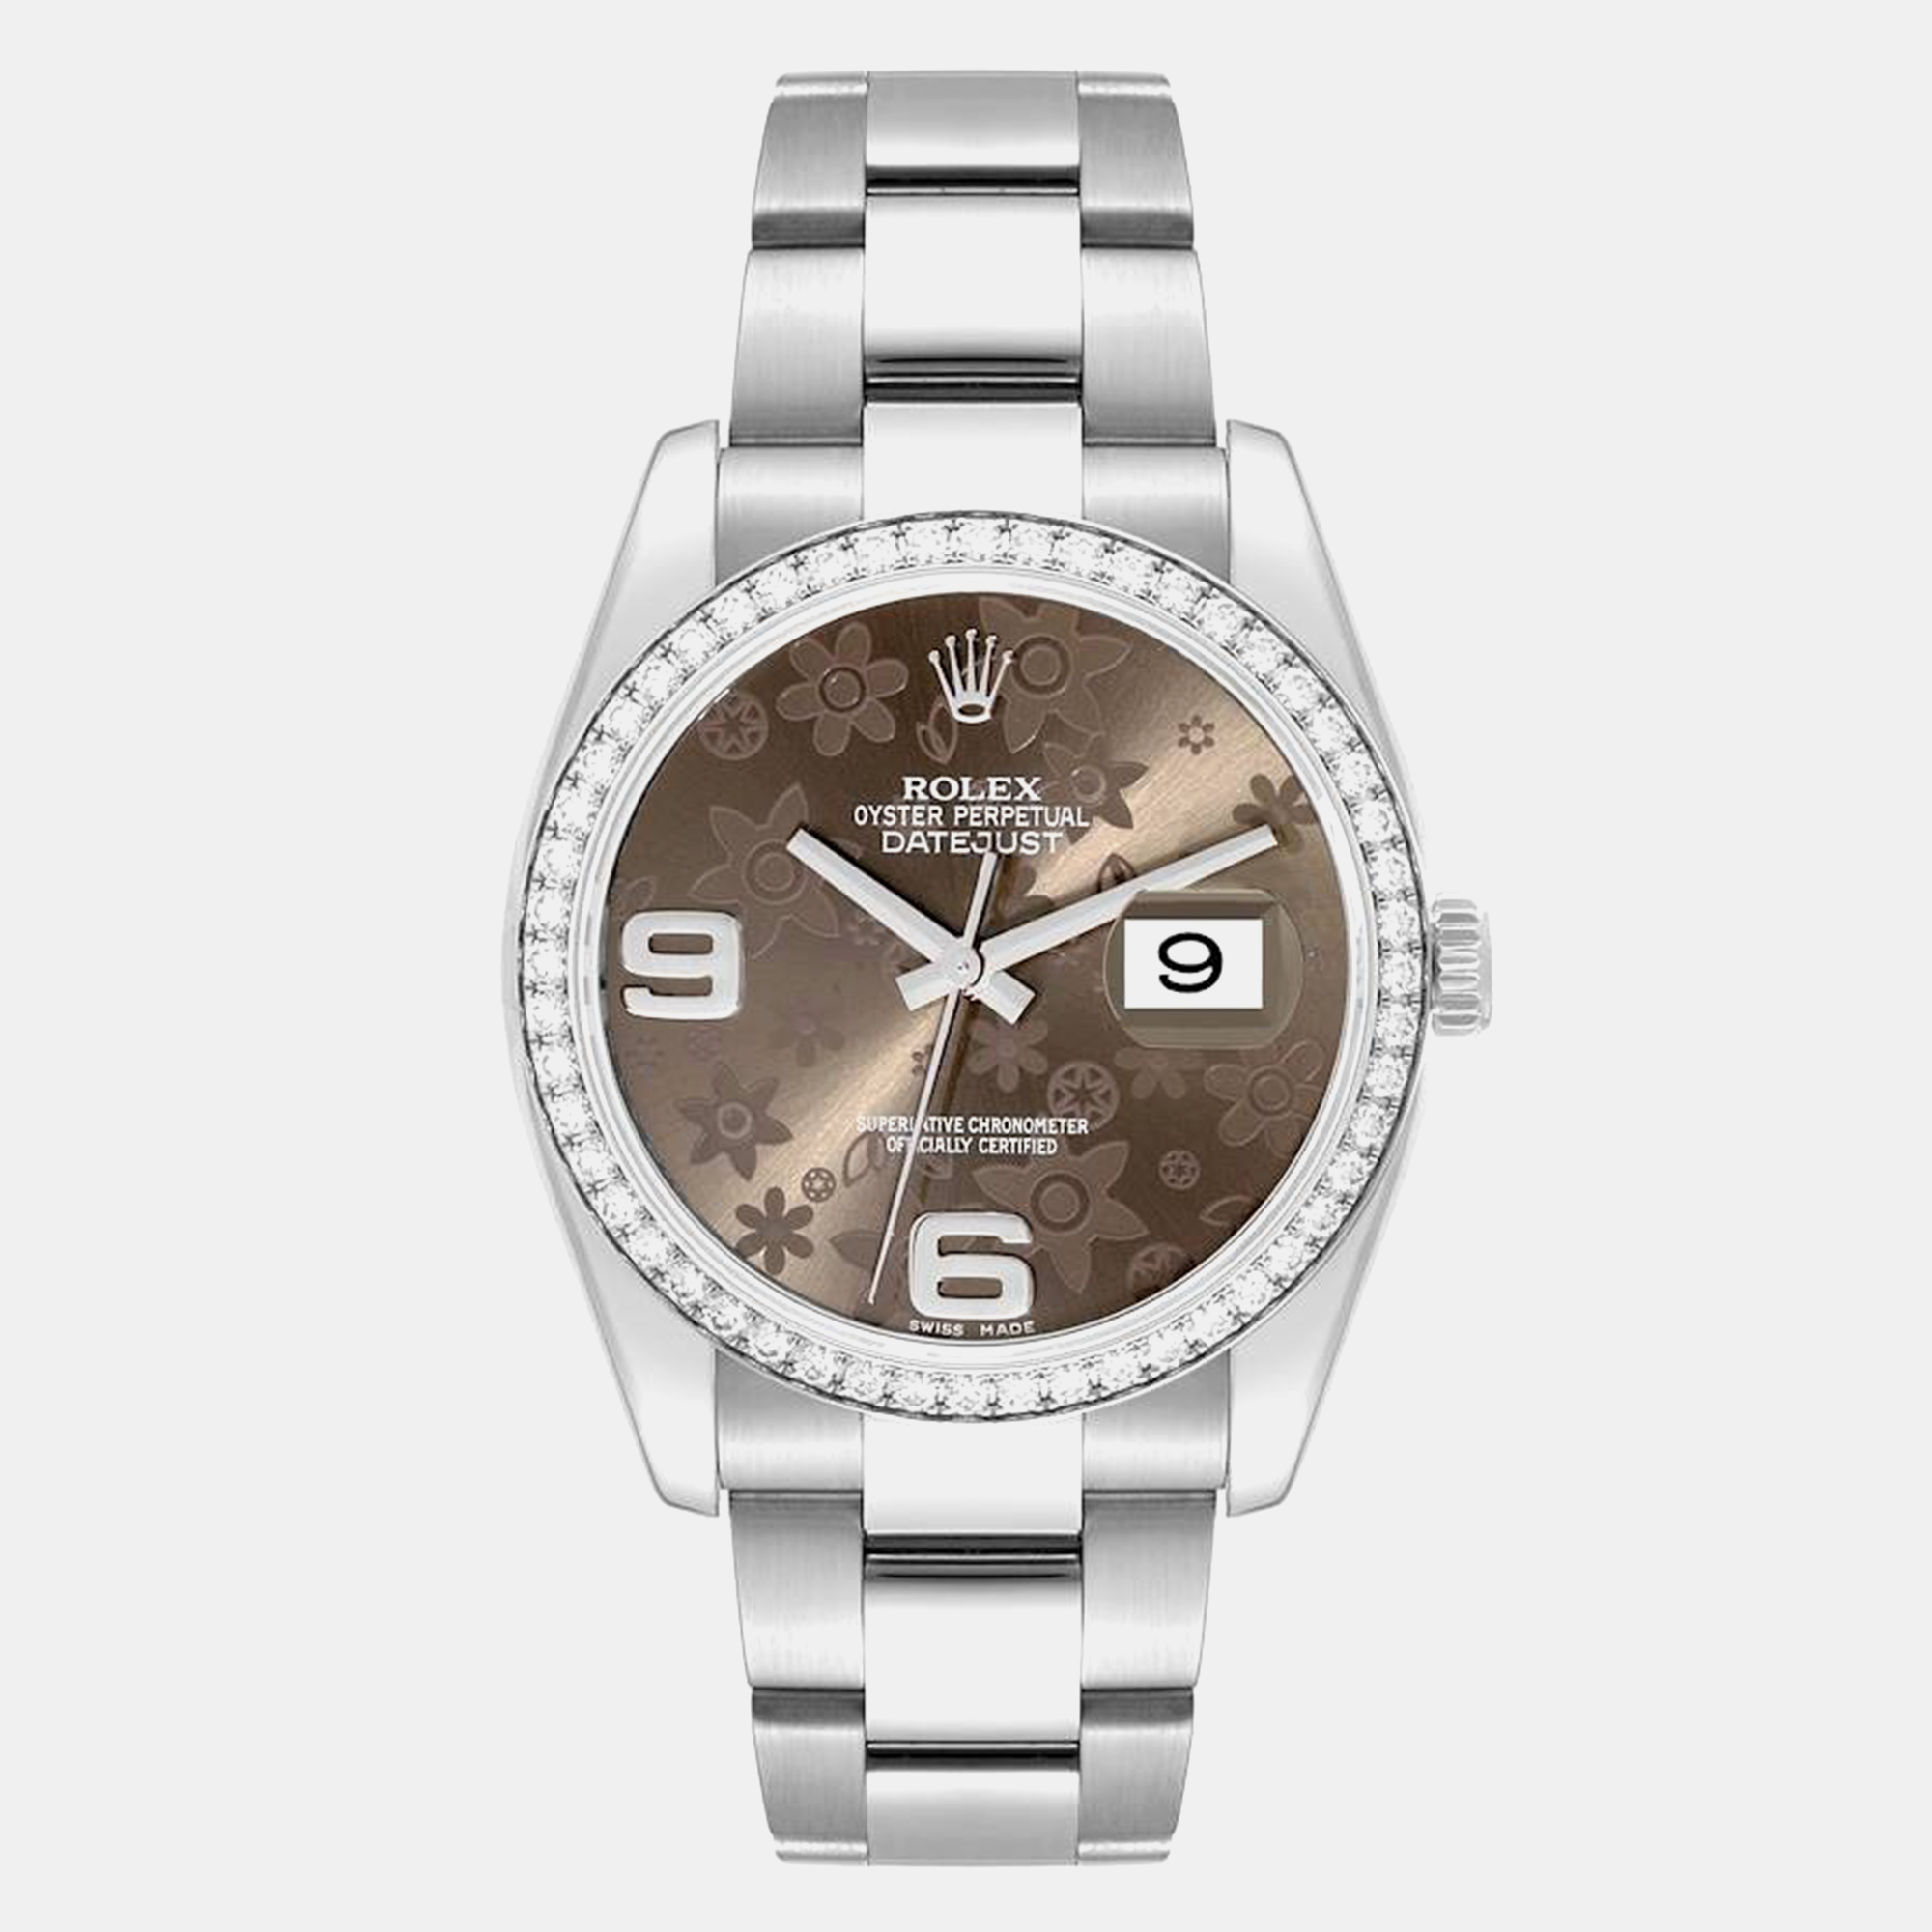 Rolex datejust bronze flower dial diamond bezel steel watch 116244 36 mm